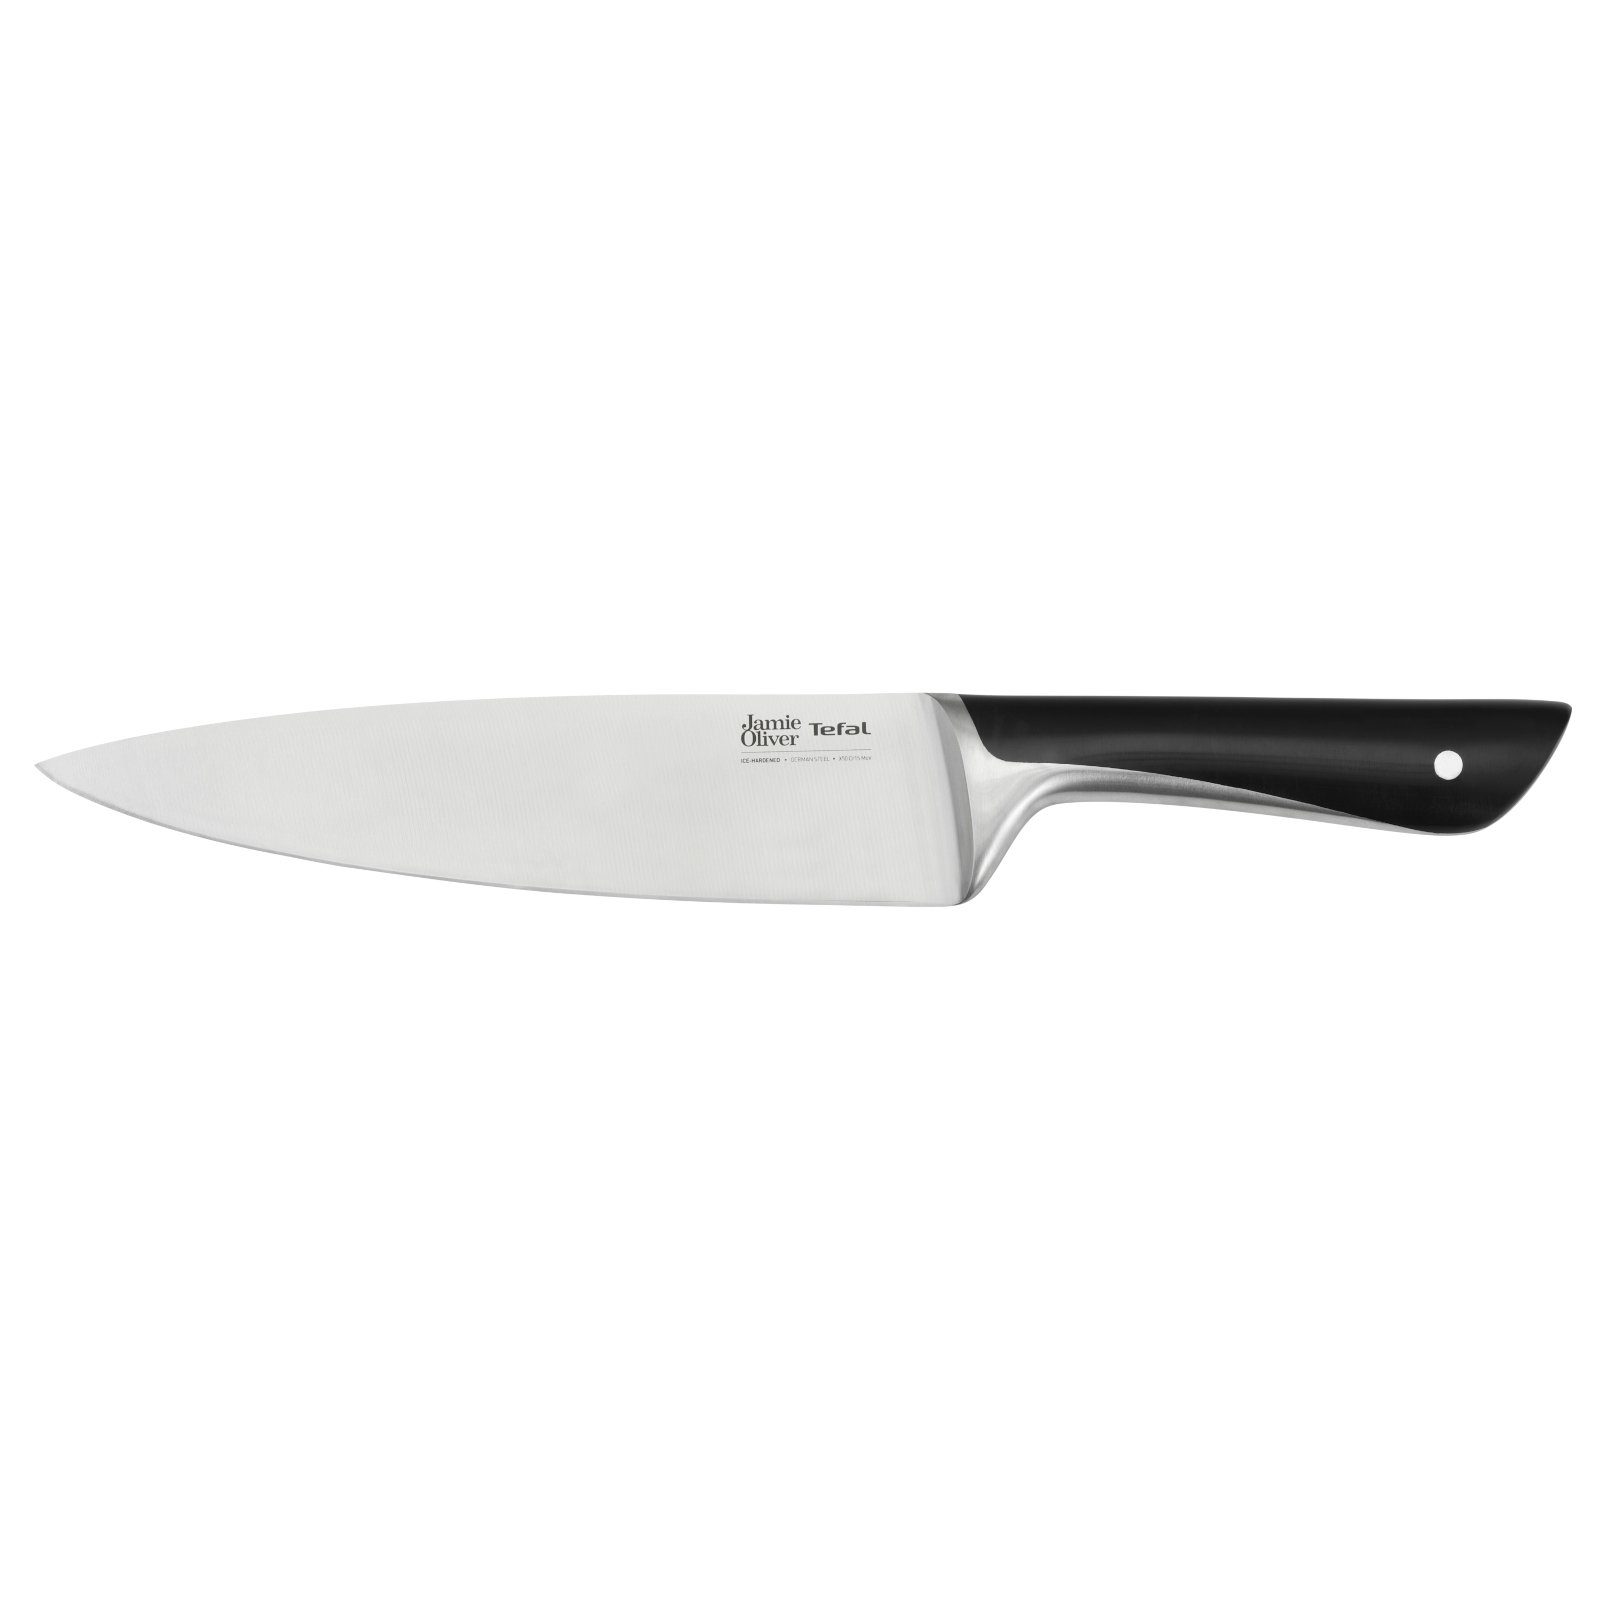 Tefal Kochmesser Jamie Oliver 20 cm Chefs Einhandmesser Knife Kochmesser Messer